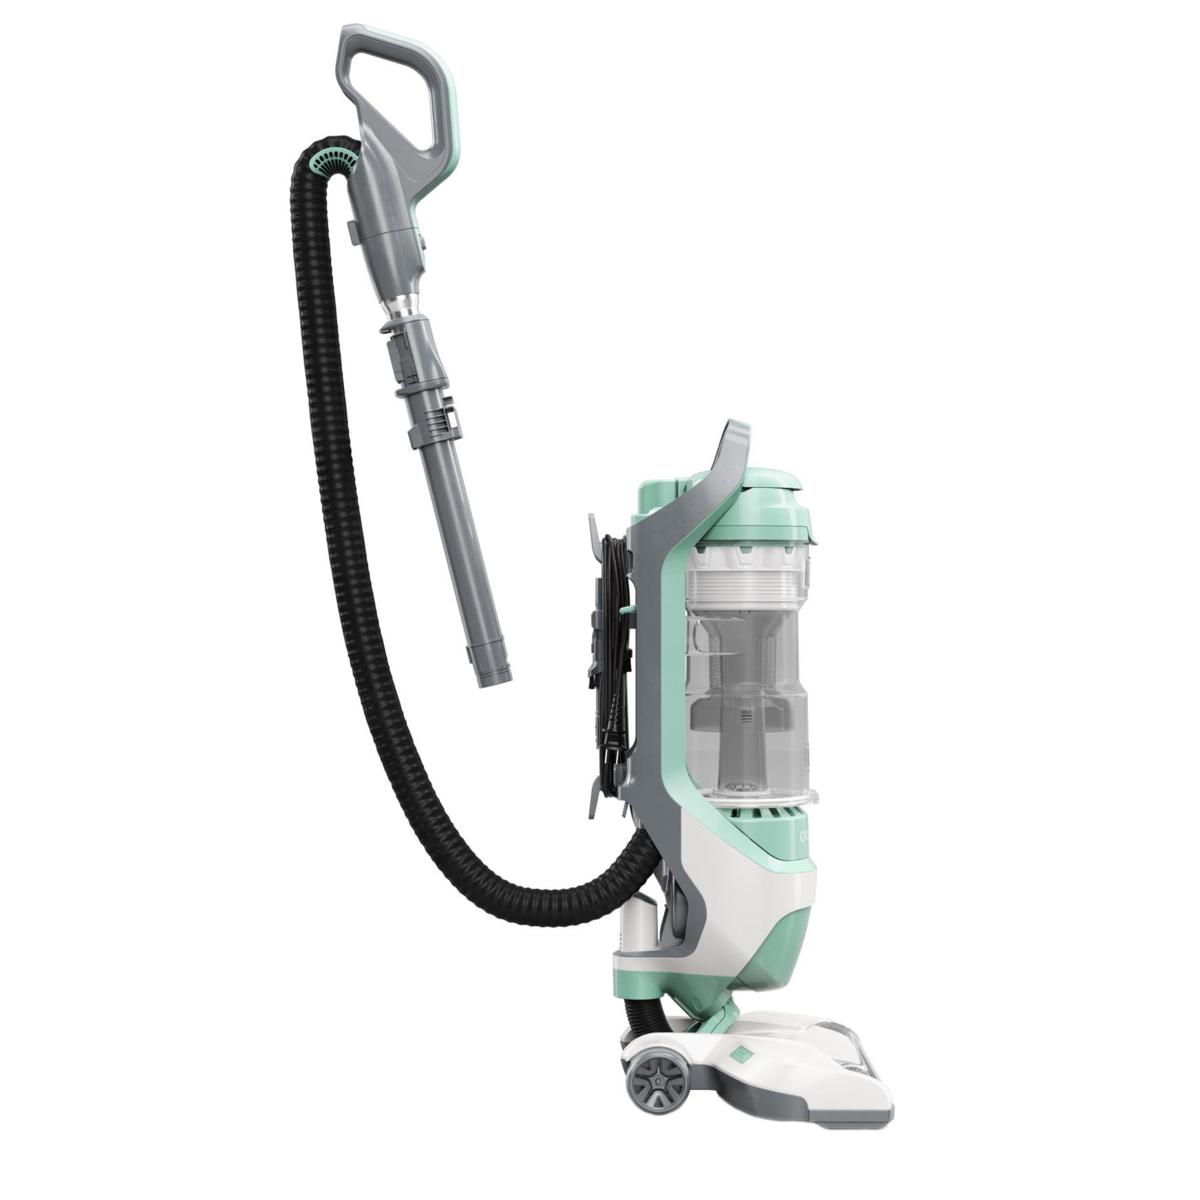 Kenmore Pet Friendly Crossover DU3017 Vacuum Cleaner